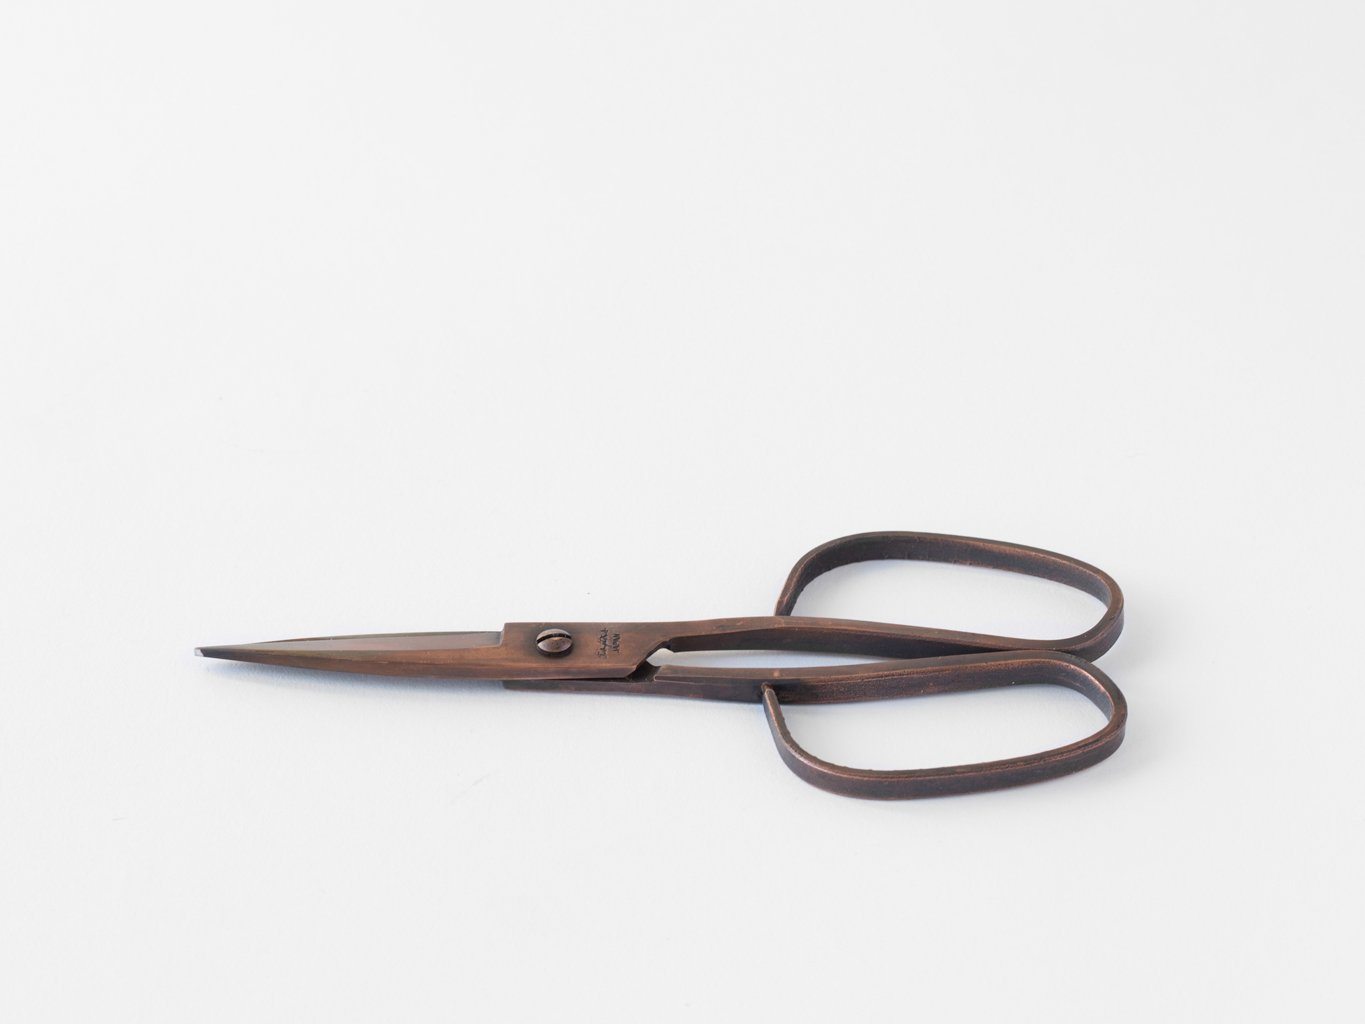 Household Scissors - Small